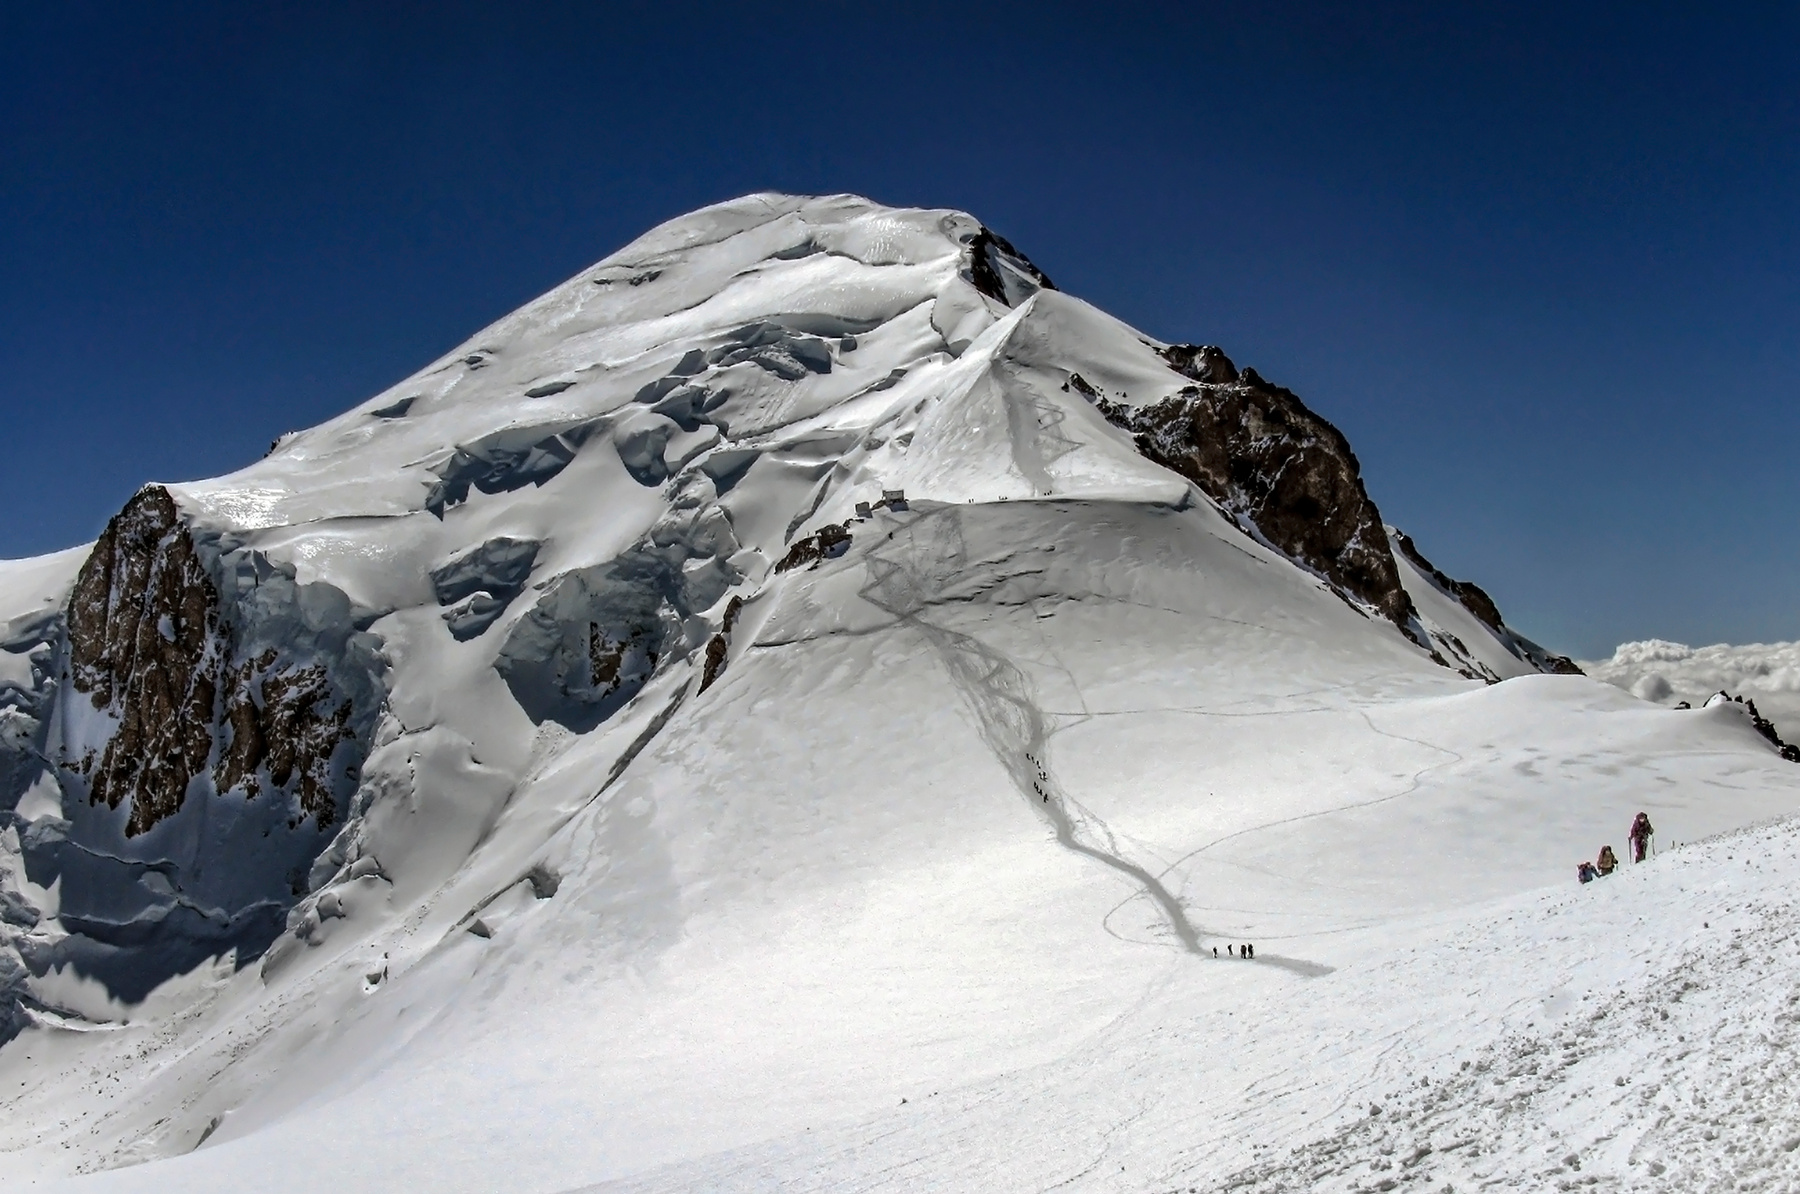 Mont Blanc (4807m). 